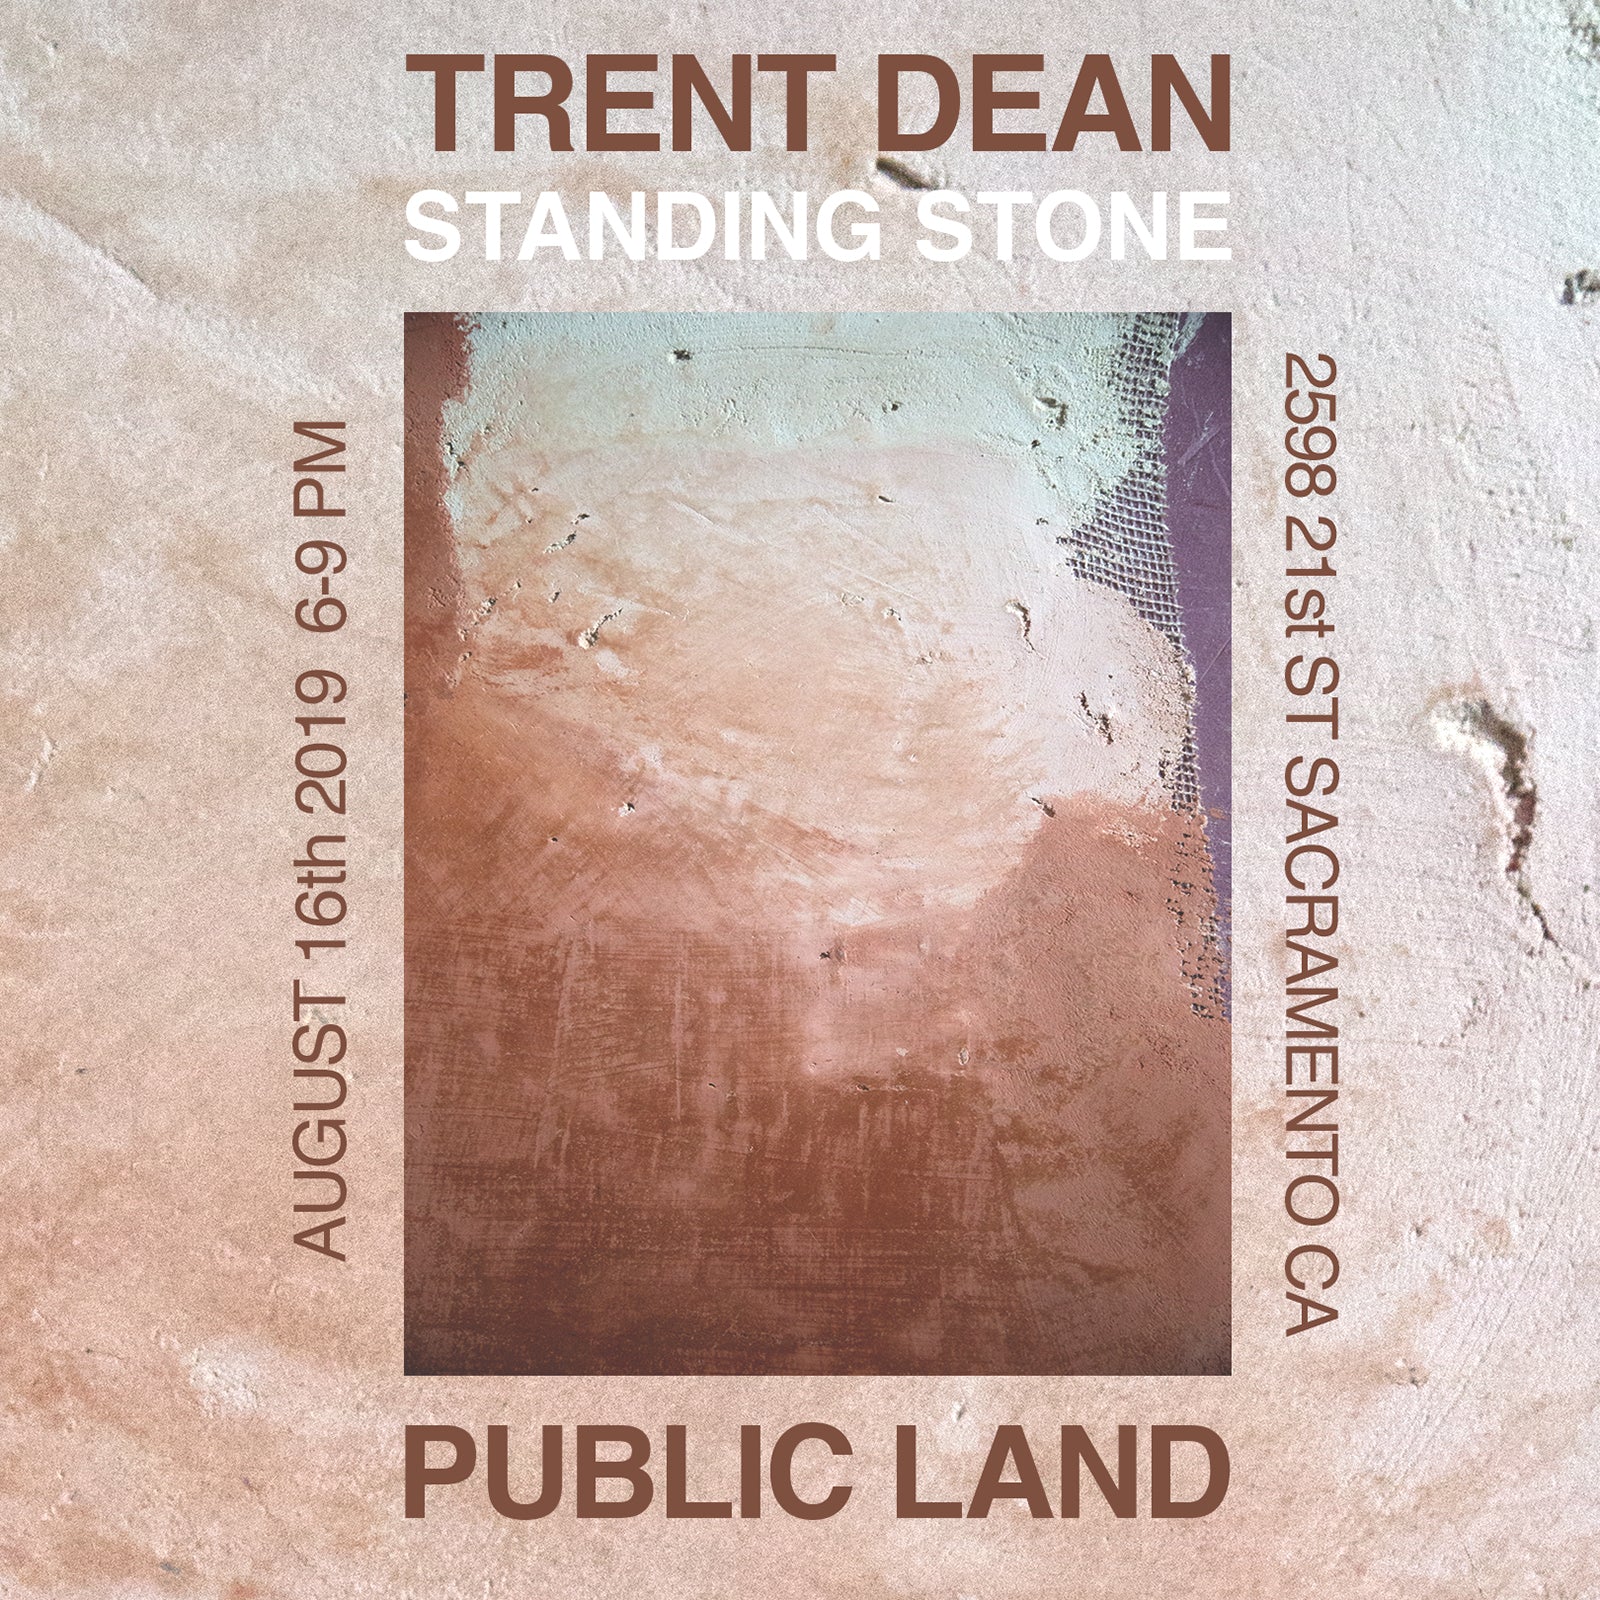 Trent Dean's "Standing Stone" @ Public Land